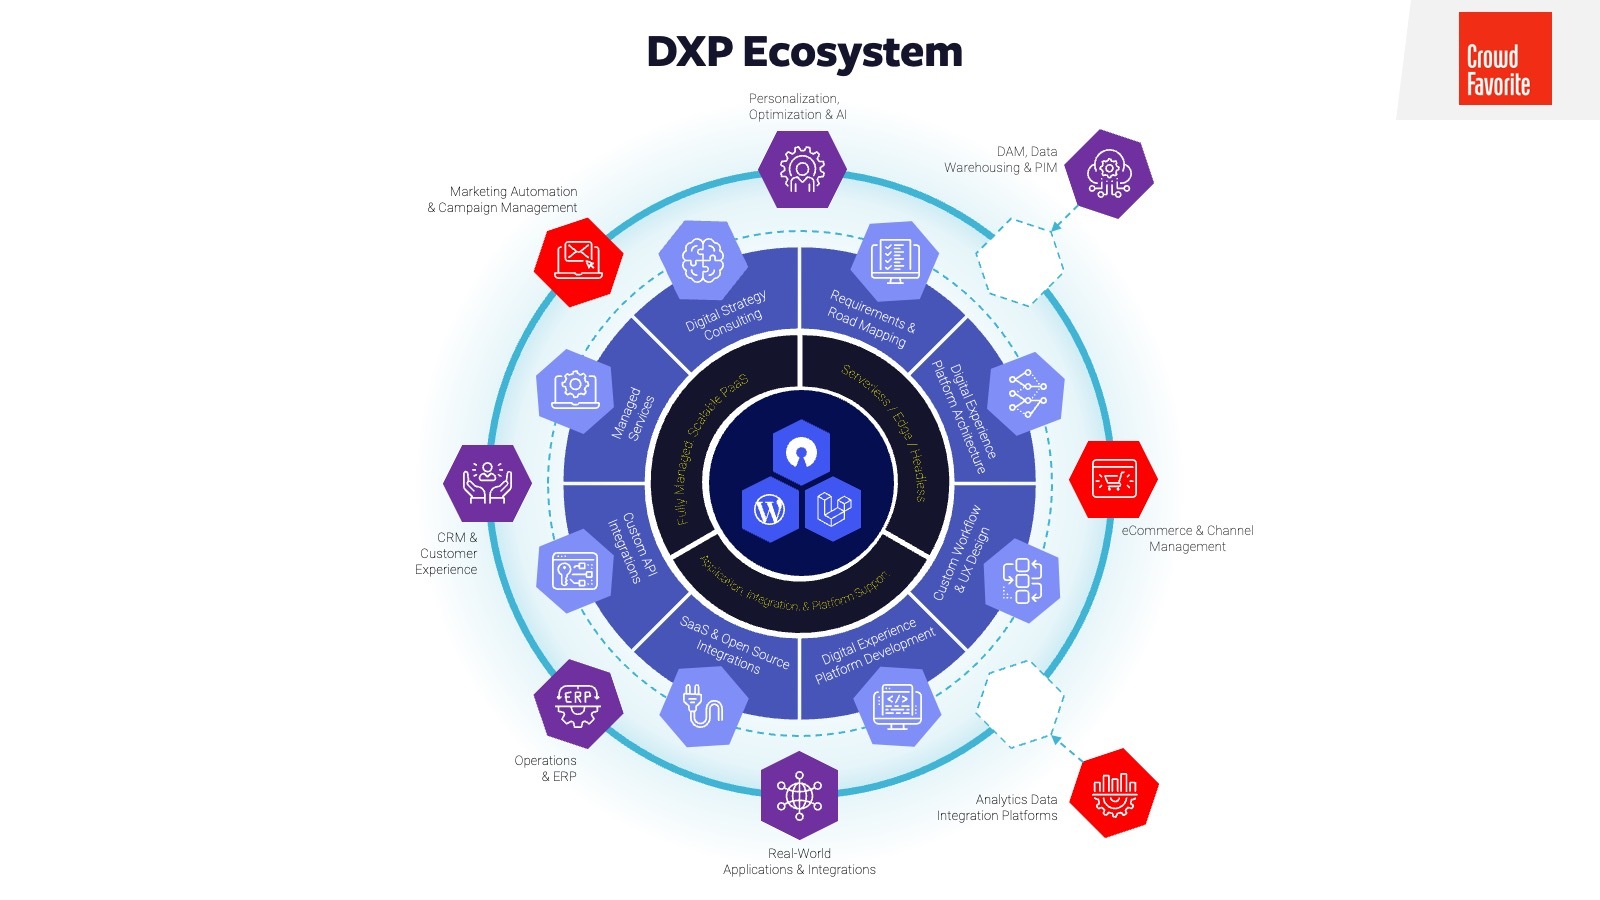 DXP Ecosystem